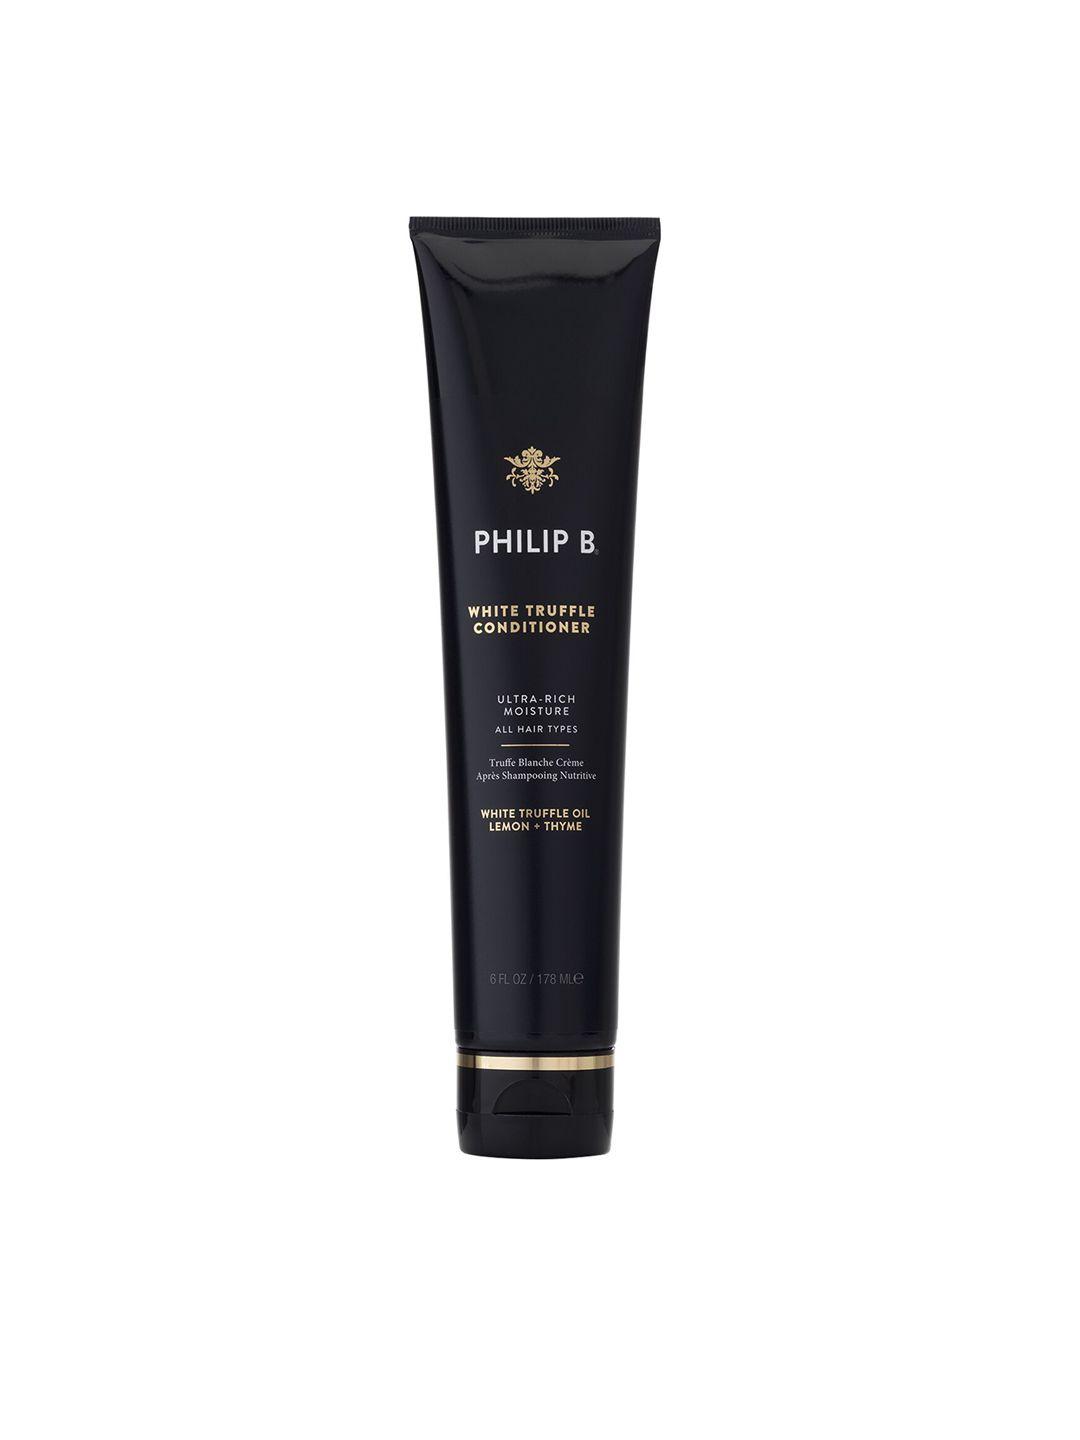 philip b white truffle oil hair conditioner with lemon & thyme - 178ml